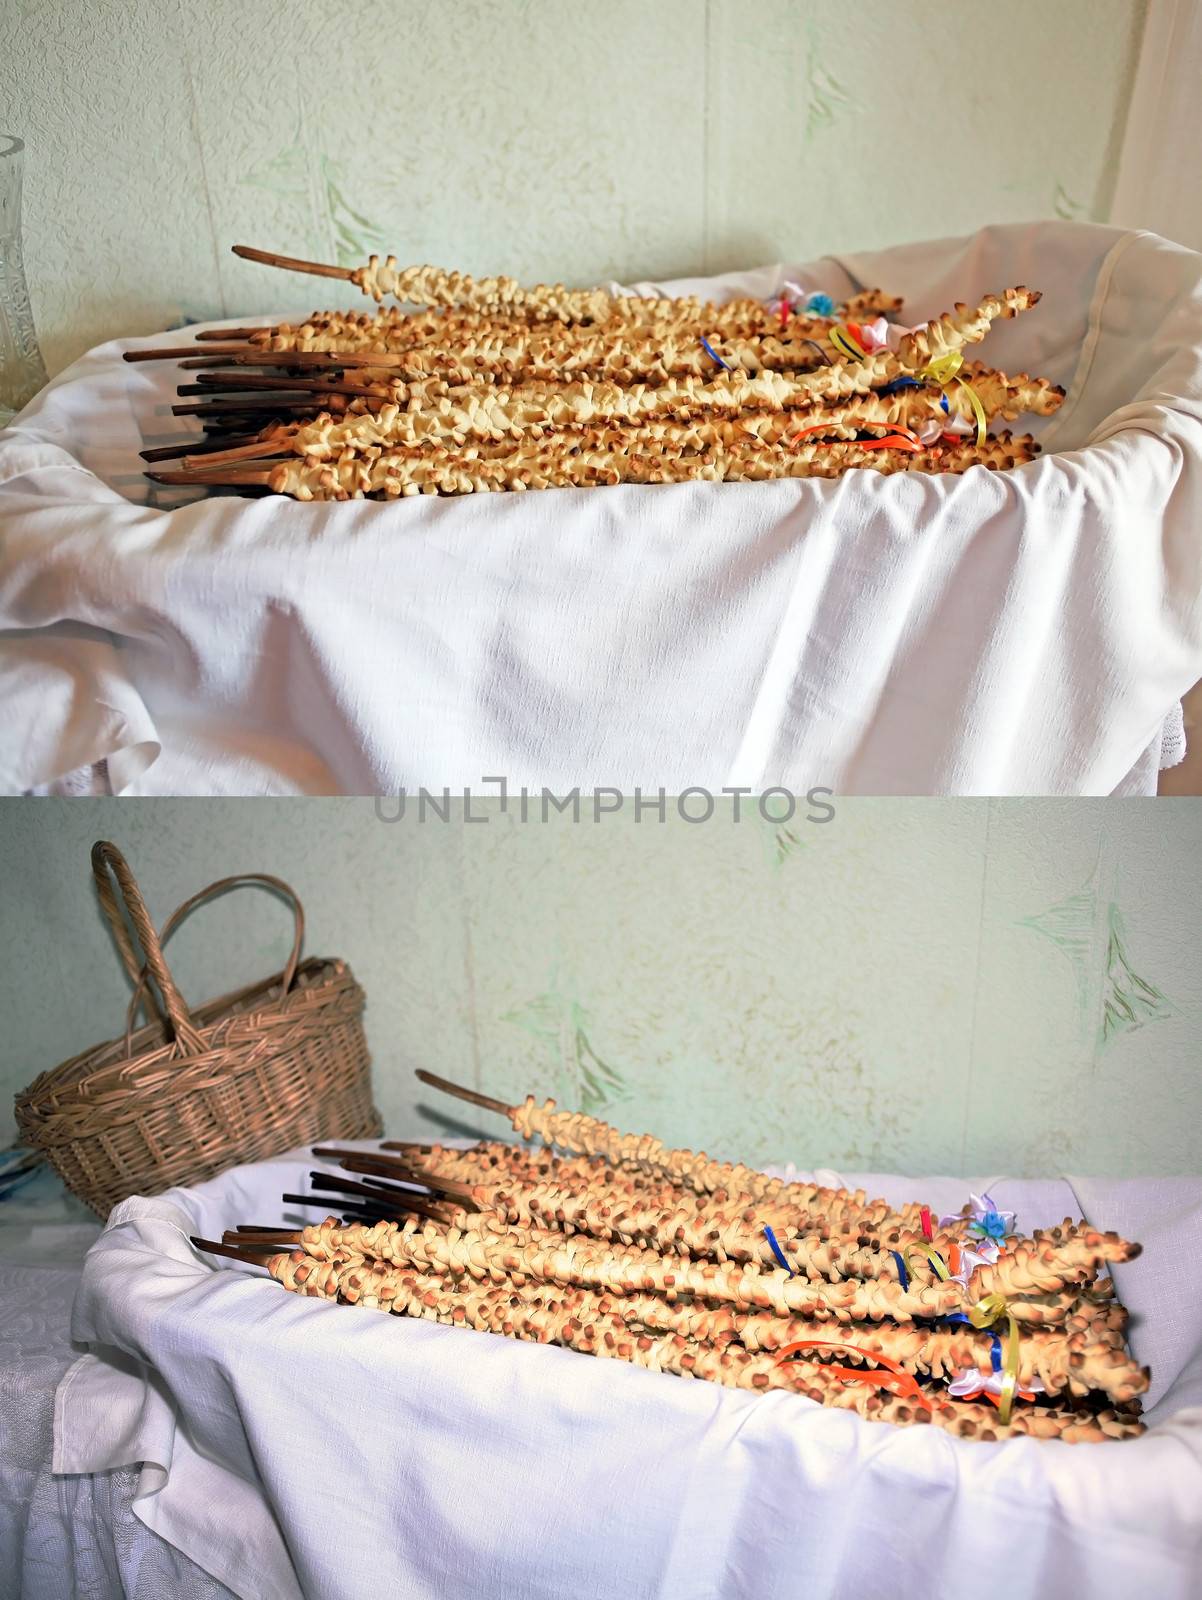 National Ukrainian wedding home baking - bread on a stick